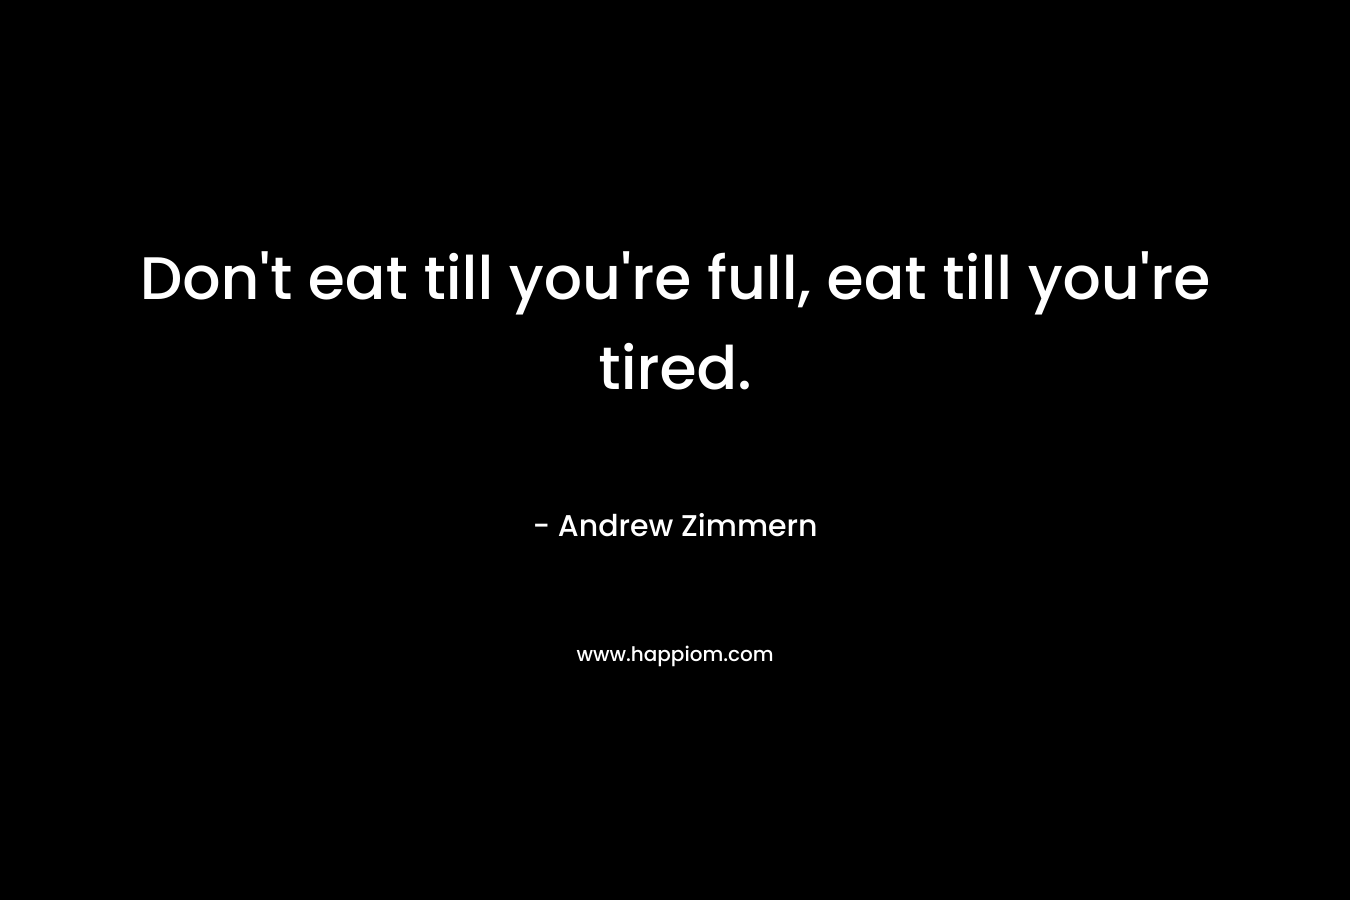 Don't eat till you're full, eat till you're tired.